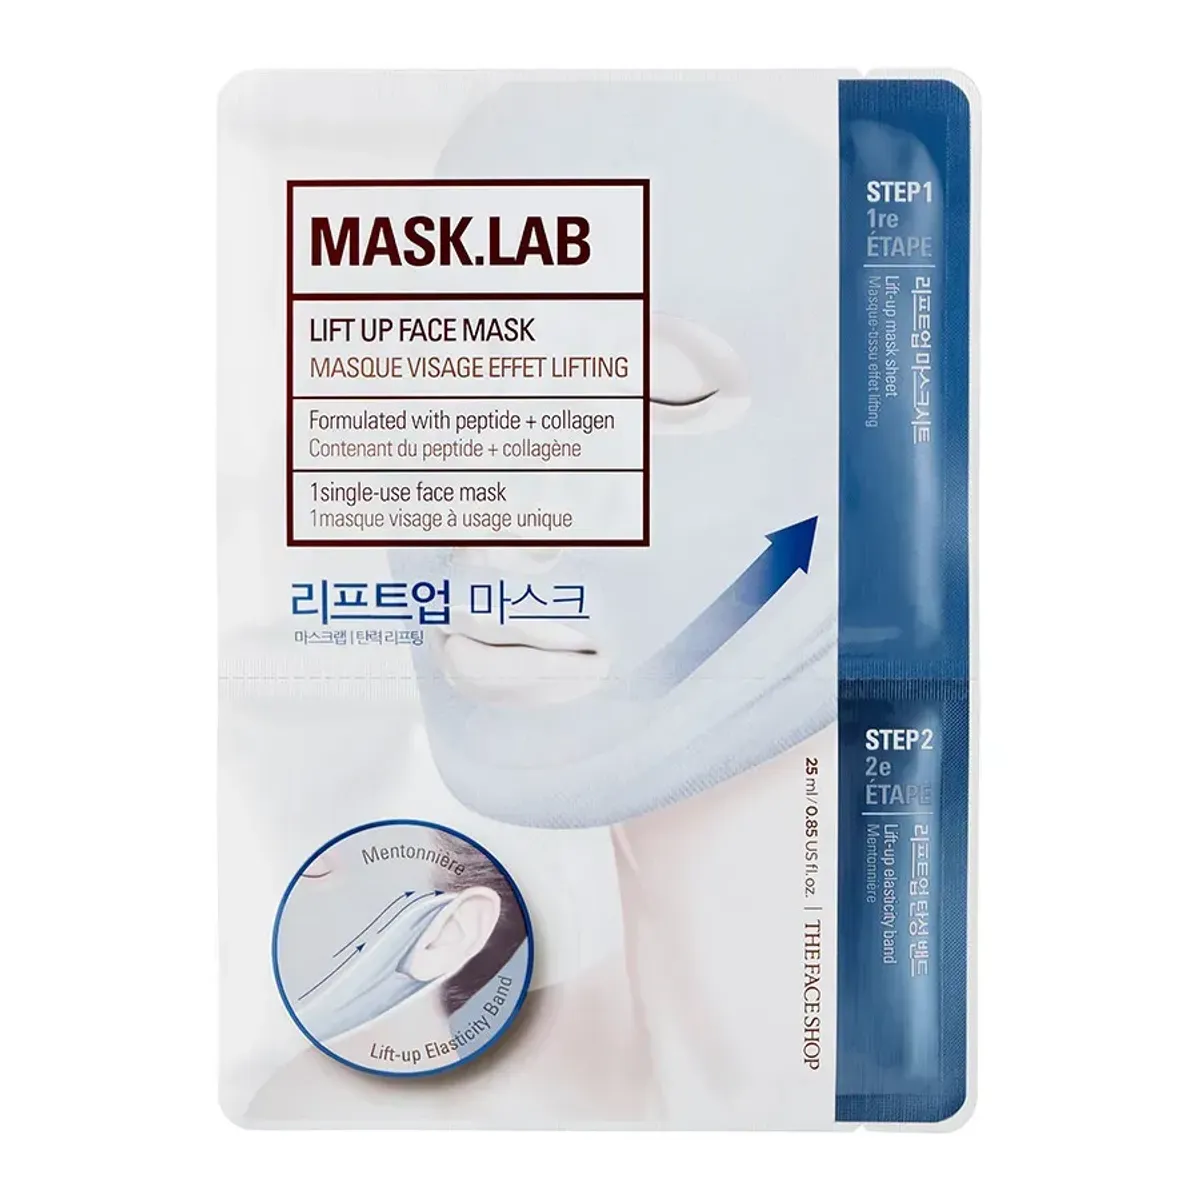 mat-na-duong-da-mask-lab-lift-up-face-mask-1